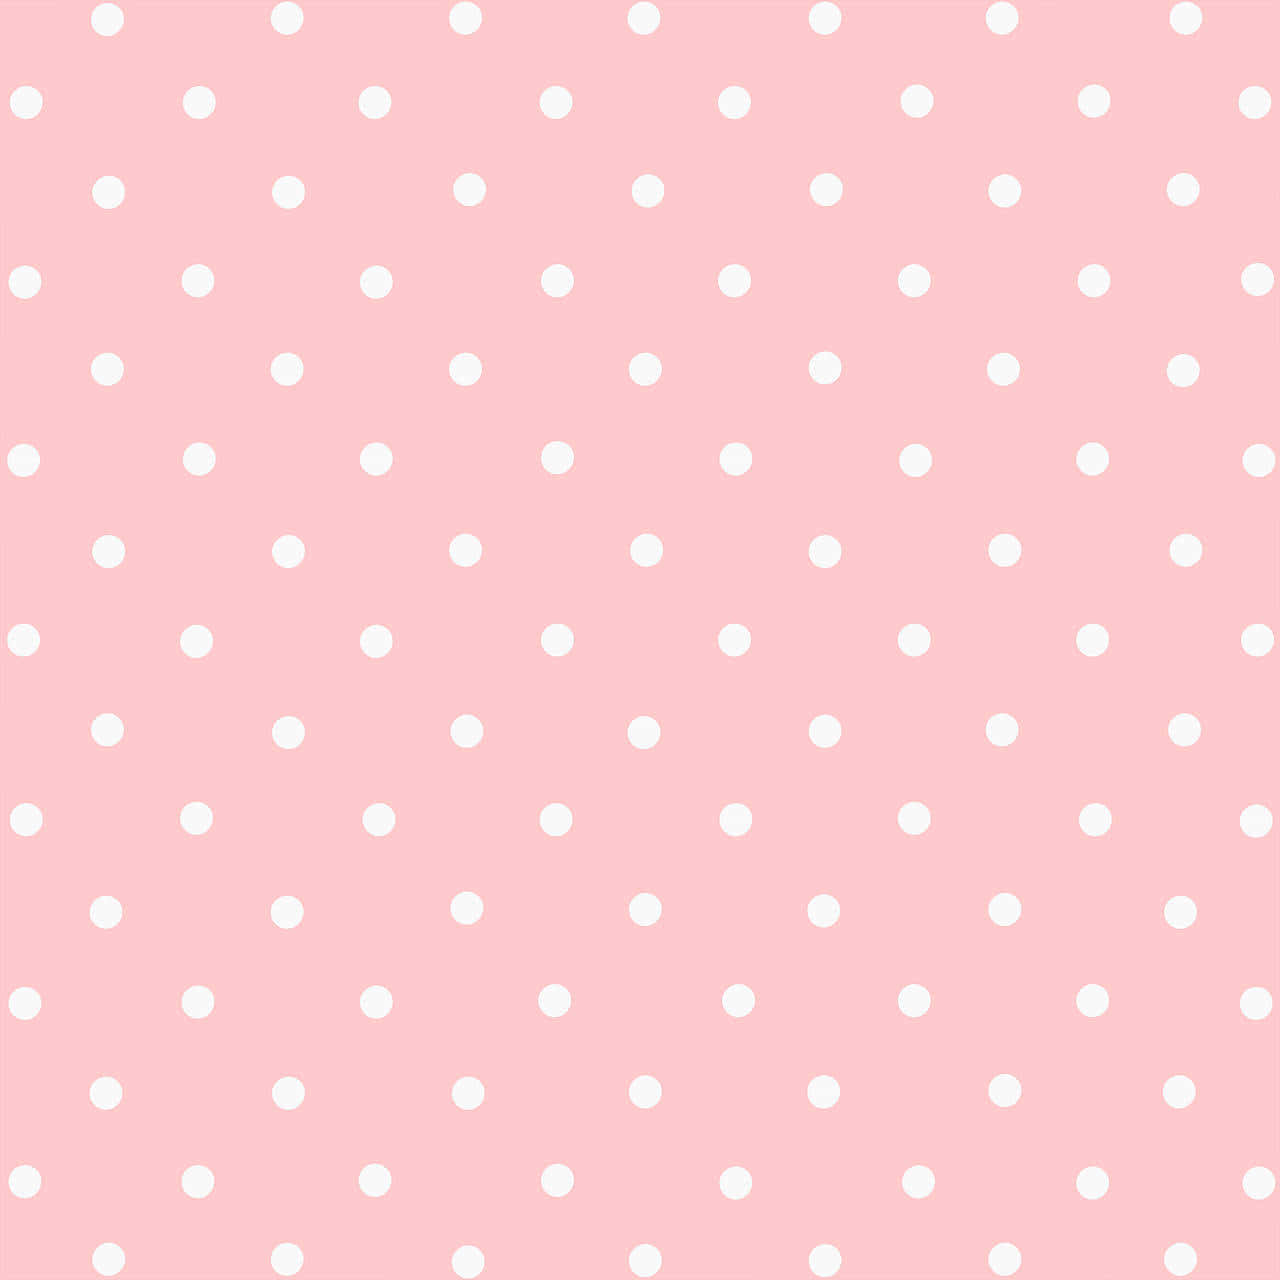 Tiny Pink And White Polka Dot Pattern Wallpaper